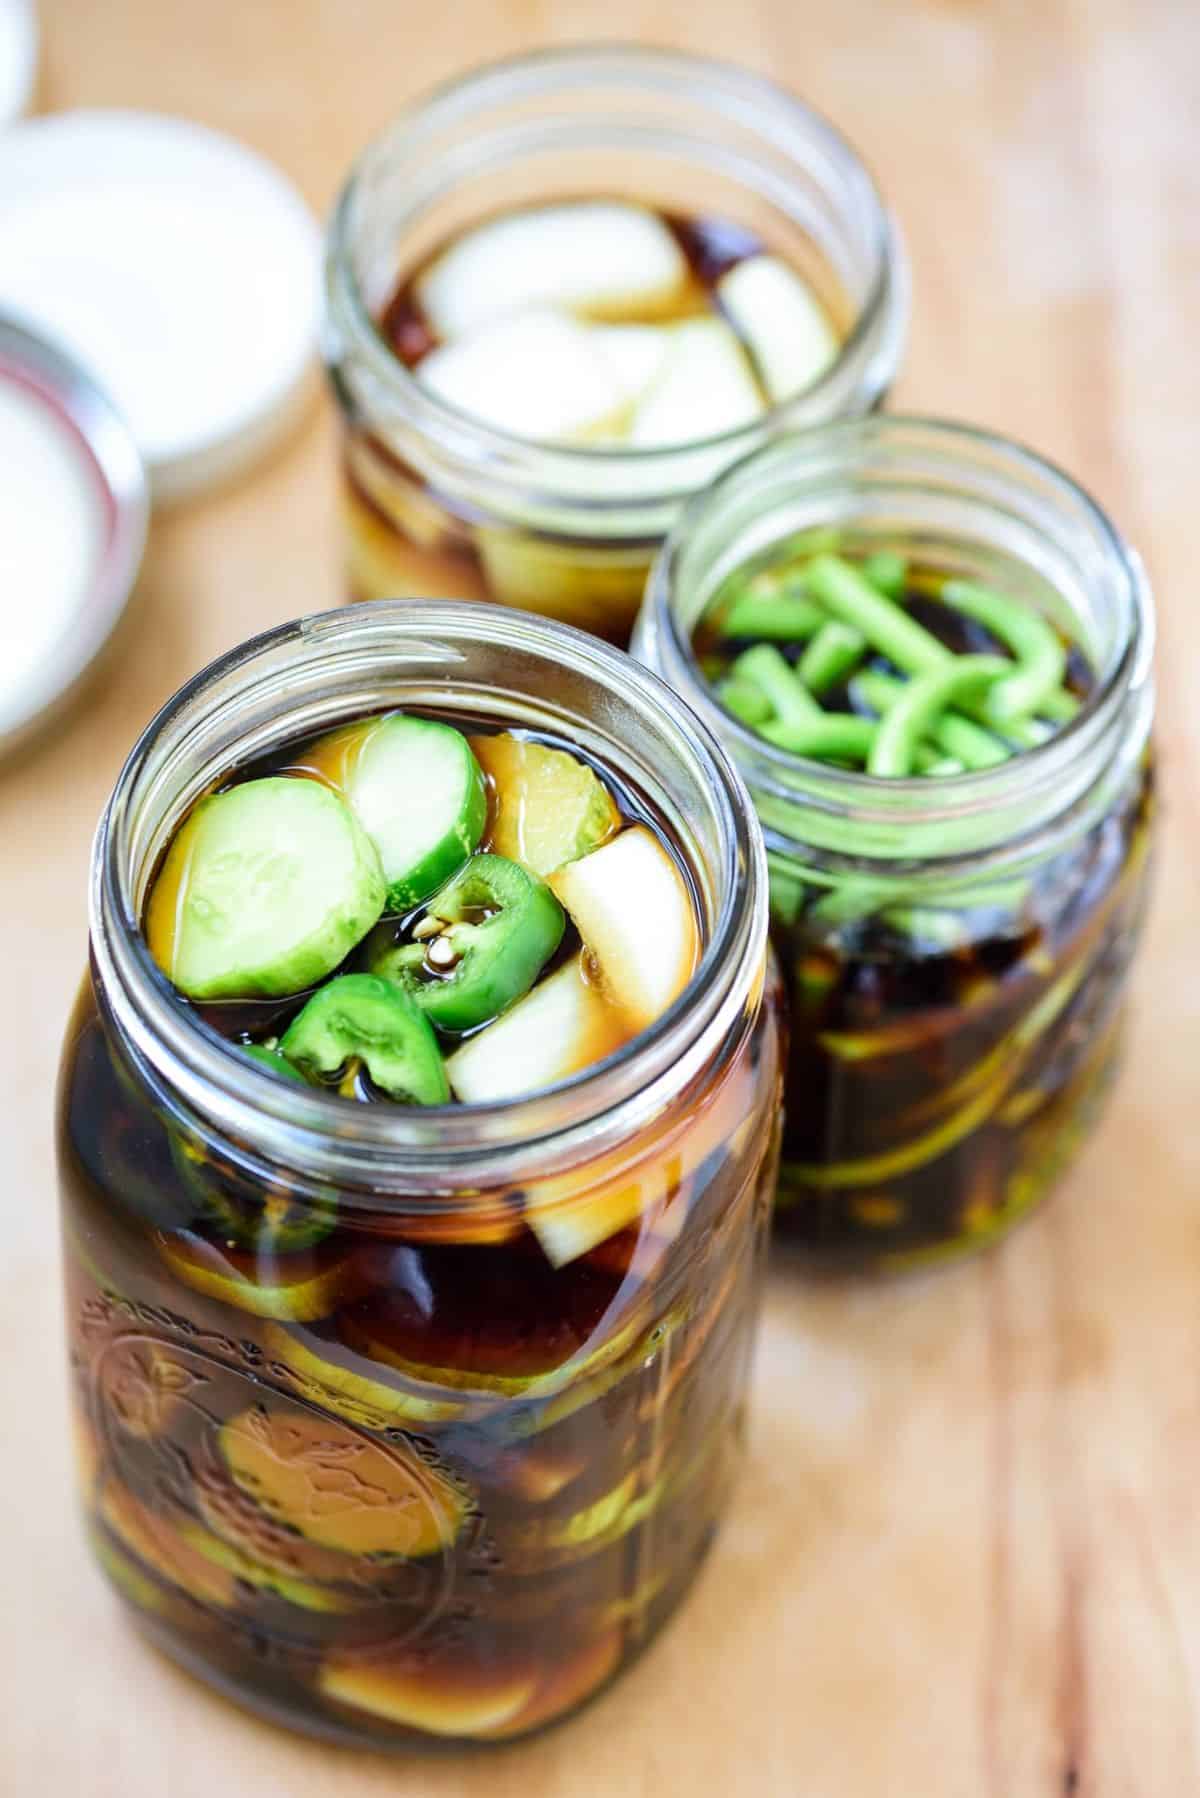 Jangajji korean pickled in glass jars.